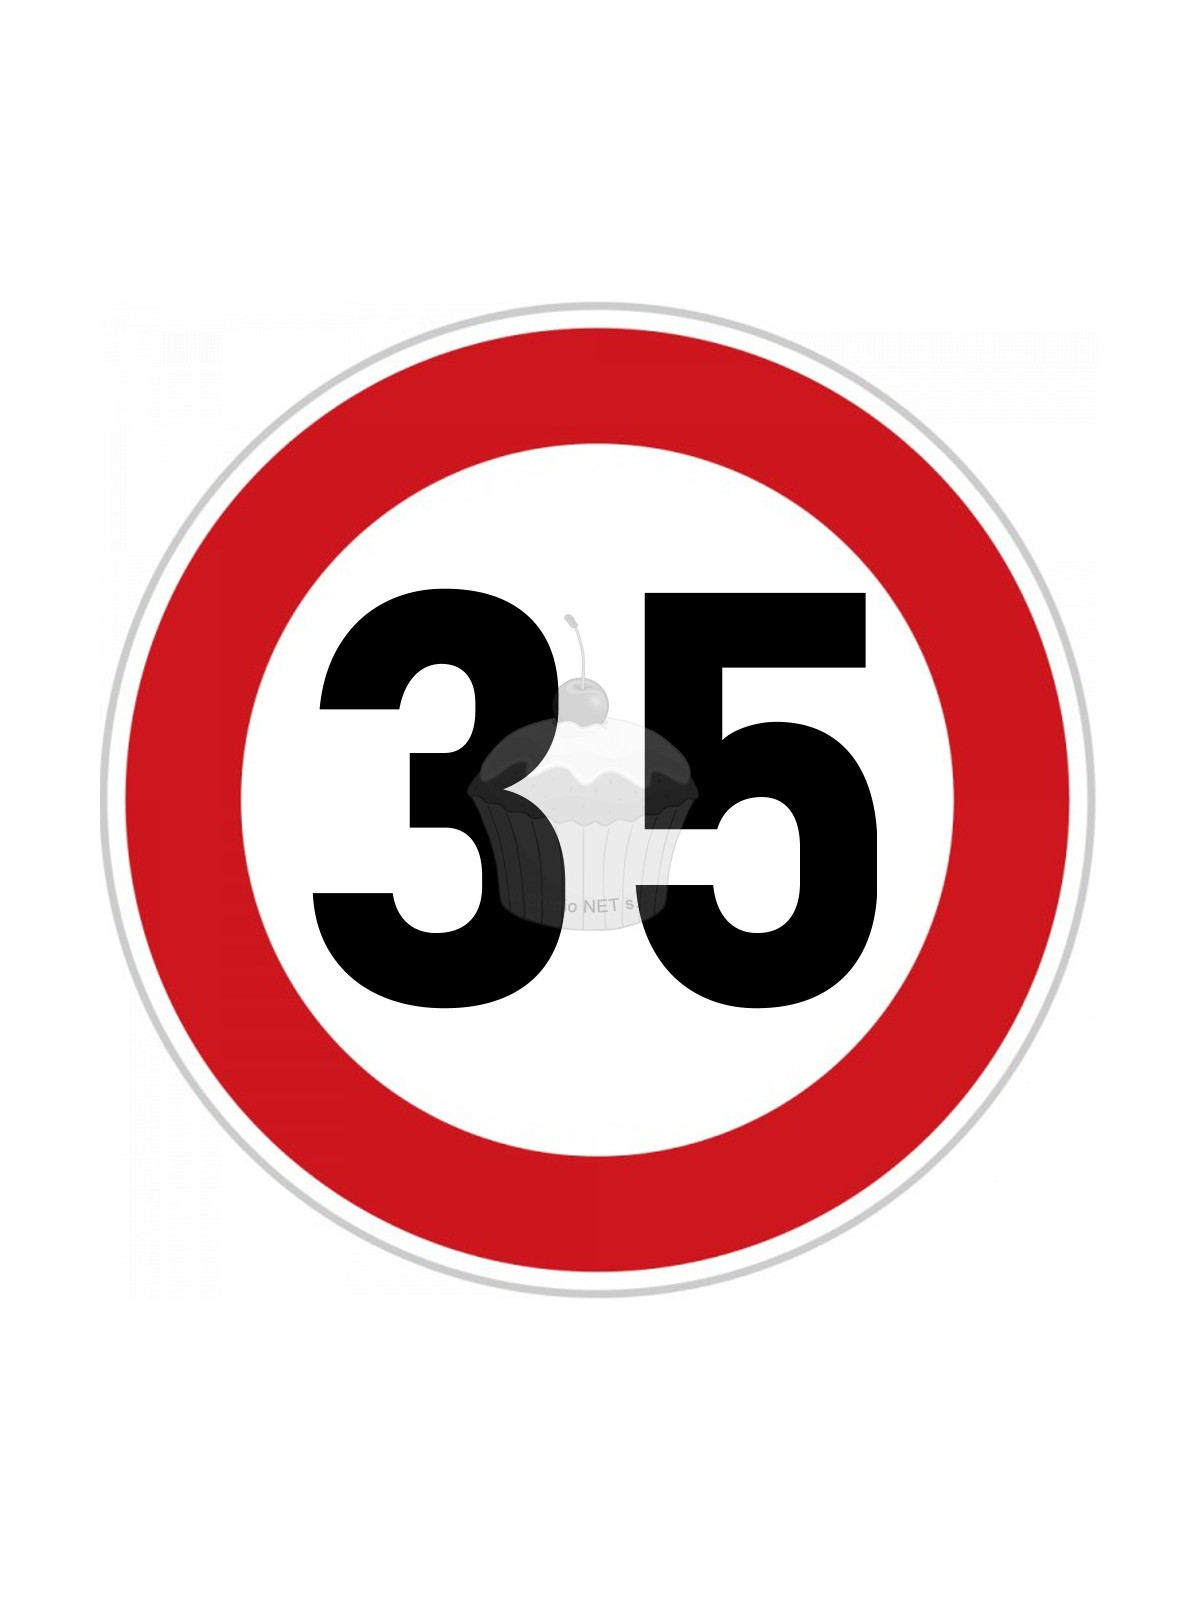 Edible paper "35th Birthday" ban sign A4